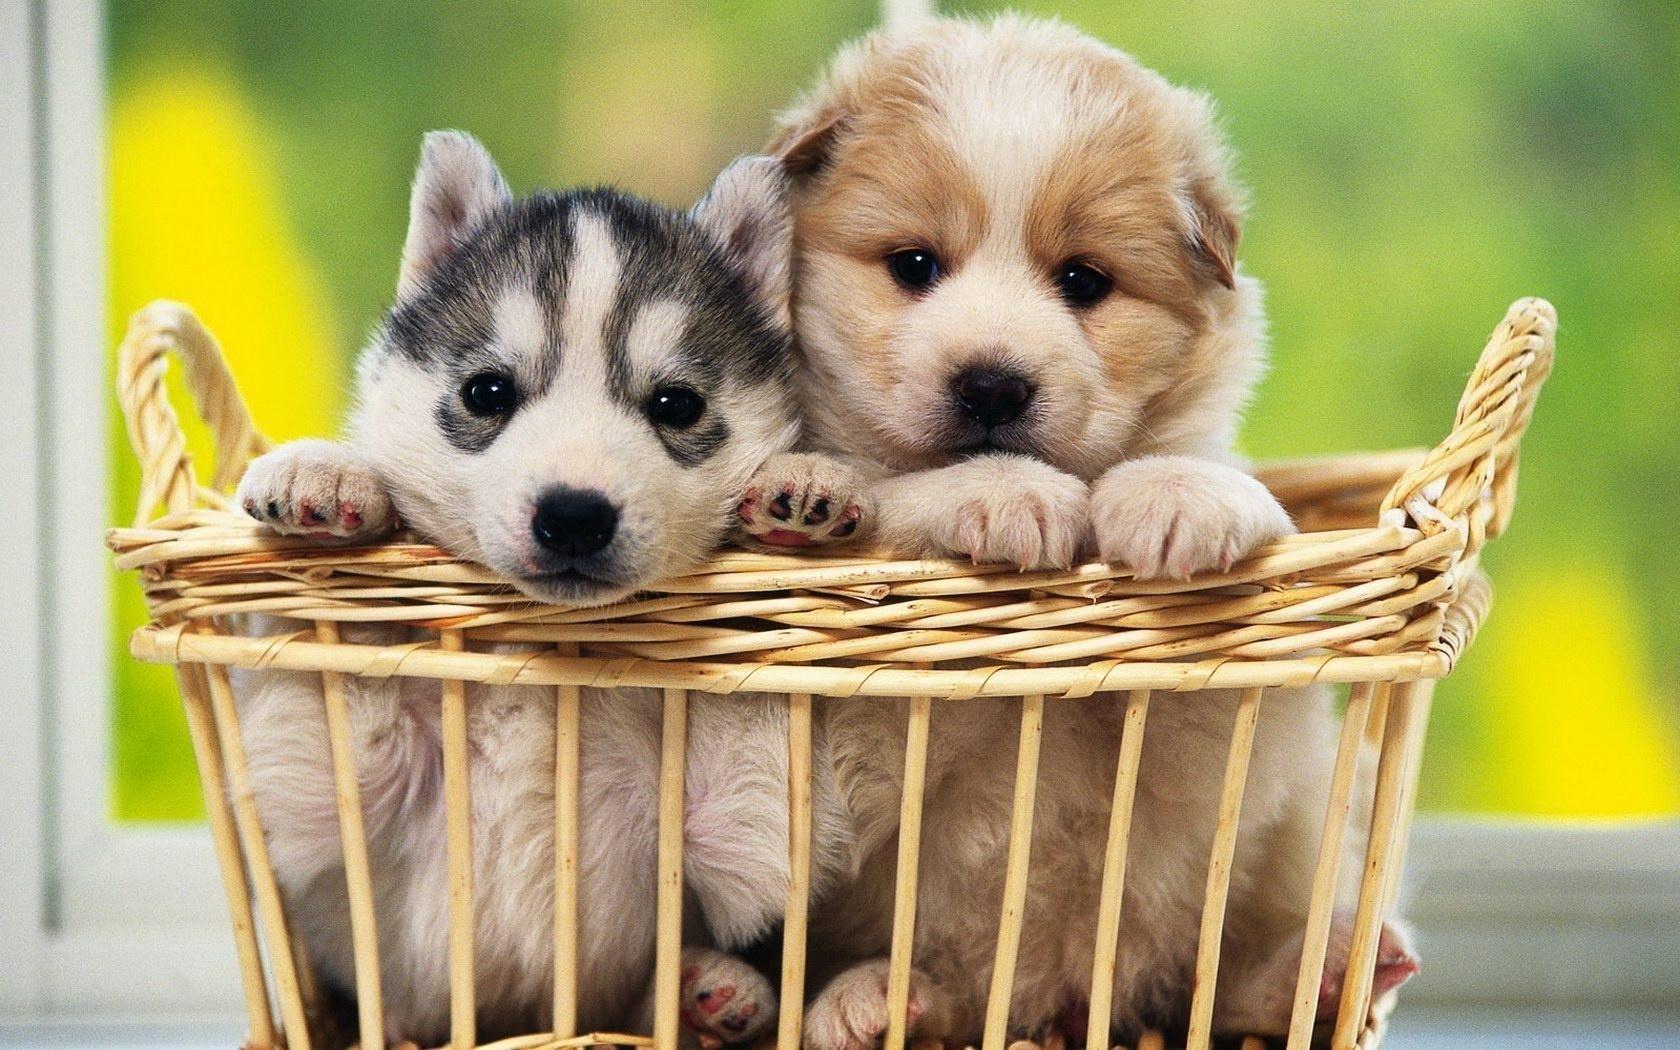 Two beautiful puppy babies in a basket. Cute dog wallpaper